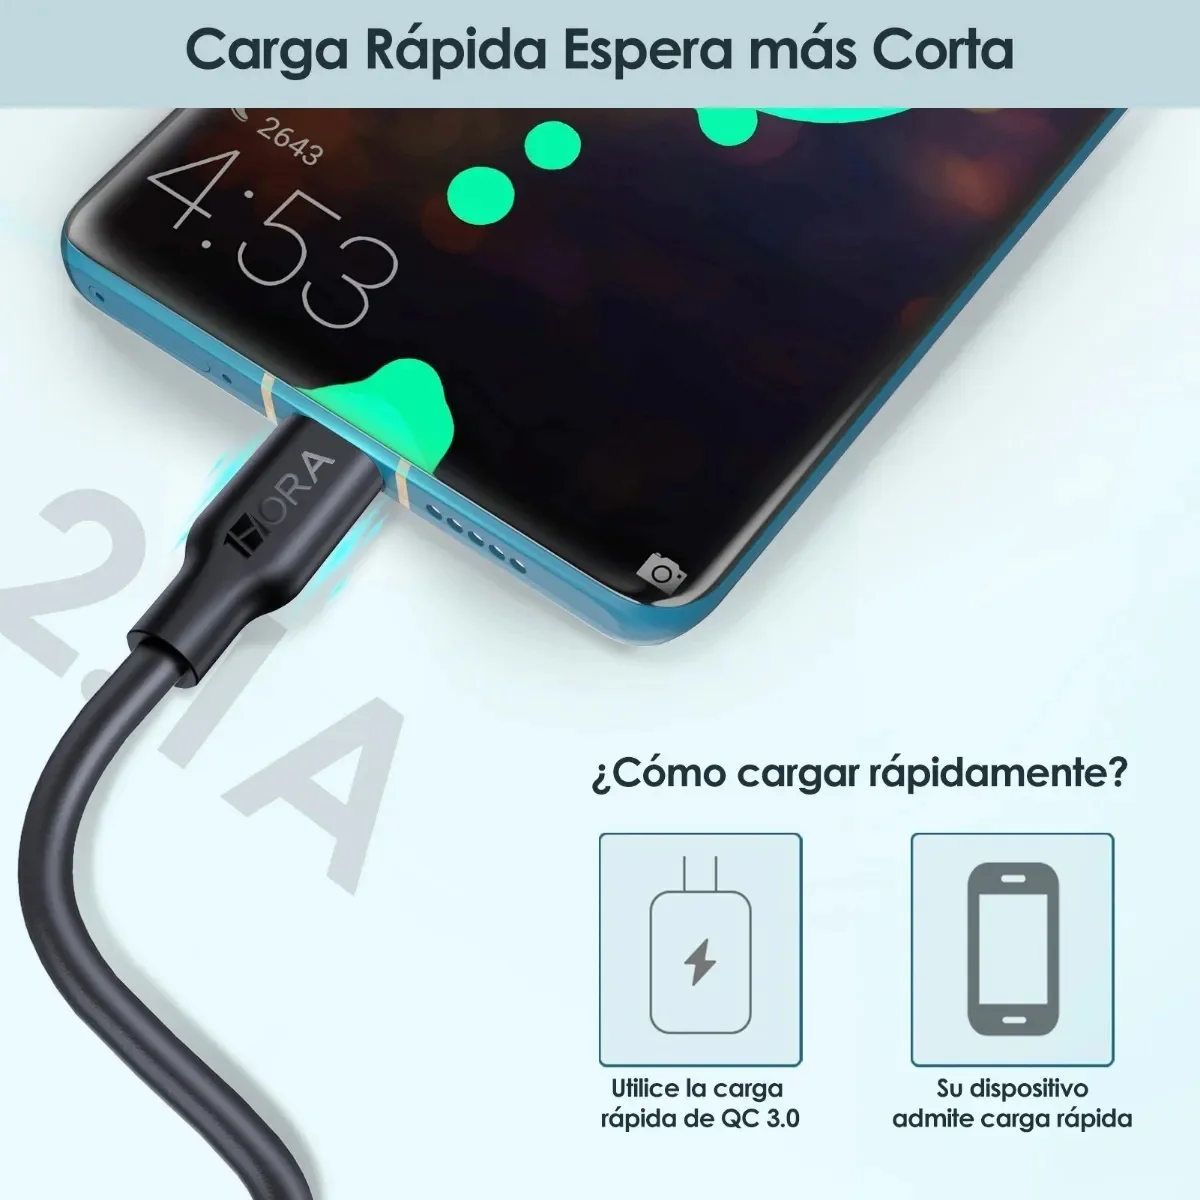 Cable Carga Rapida compatible con iPhone - Vinant SpA